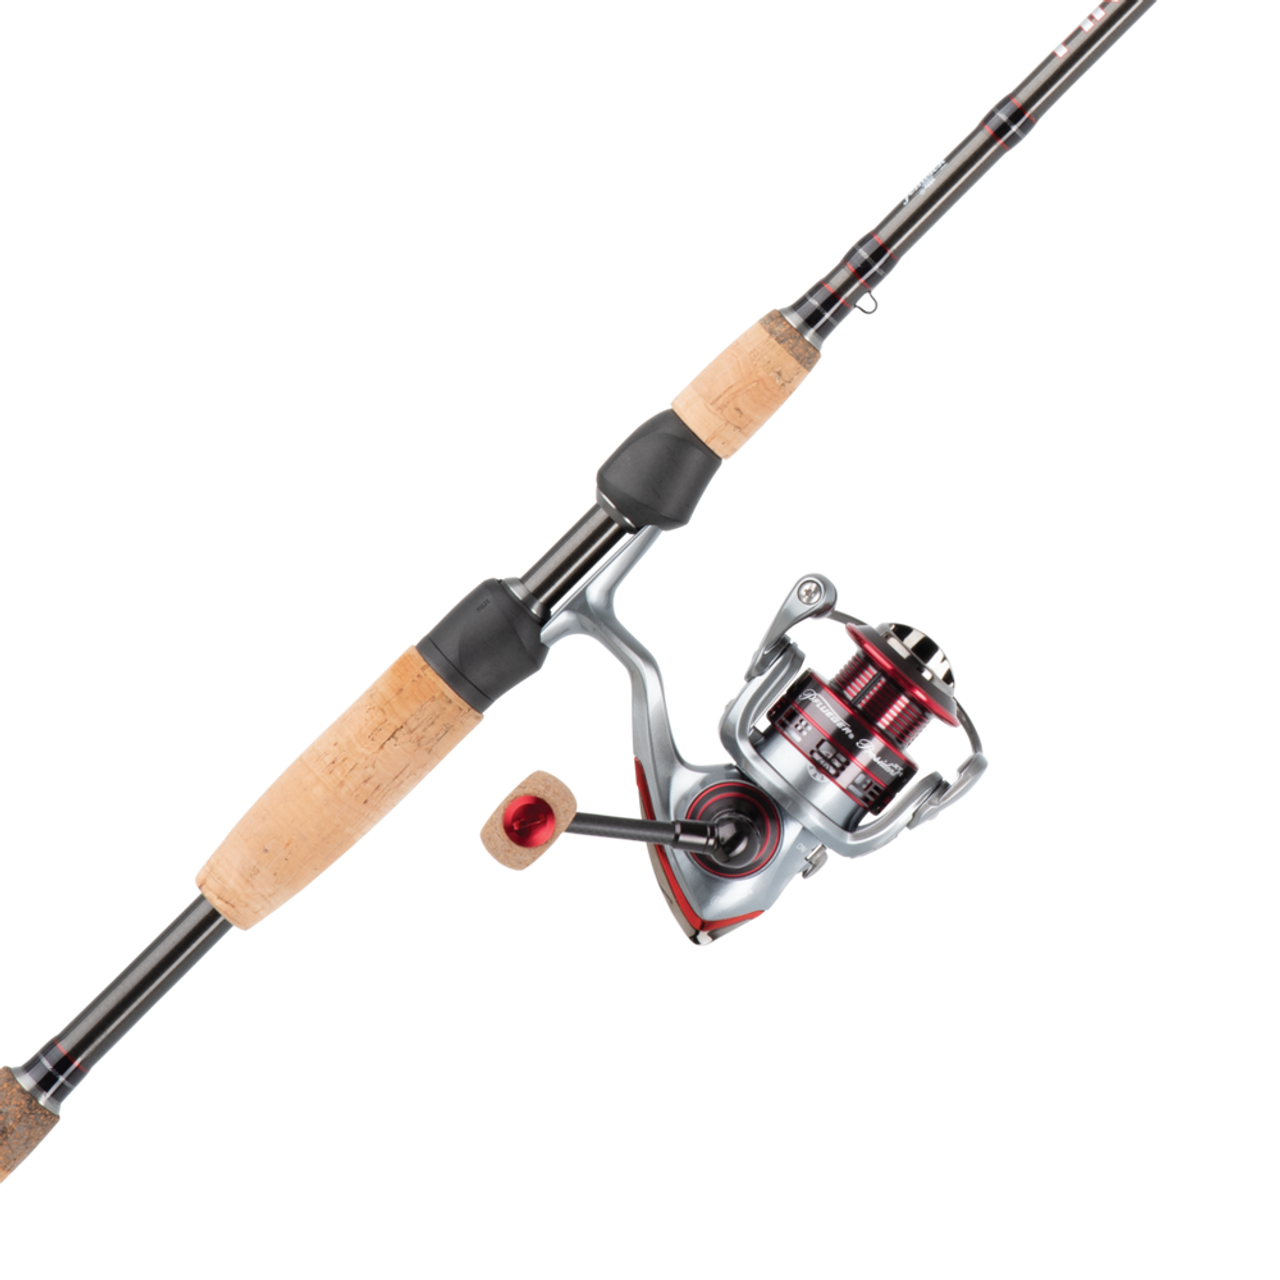 Fenwick HMX Spinning Fishing Rod, 6'6 - Medium - 2pcs 